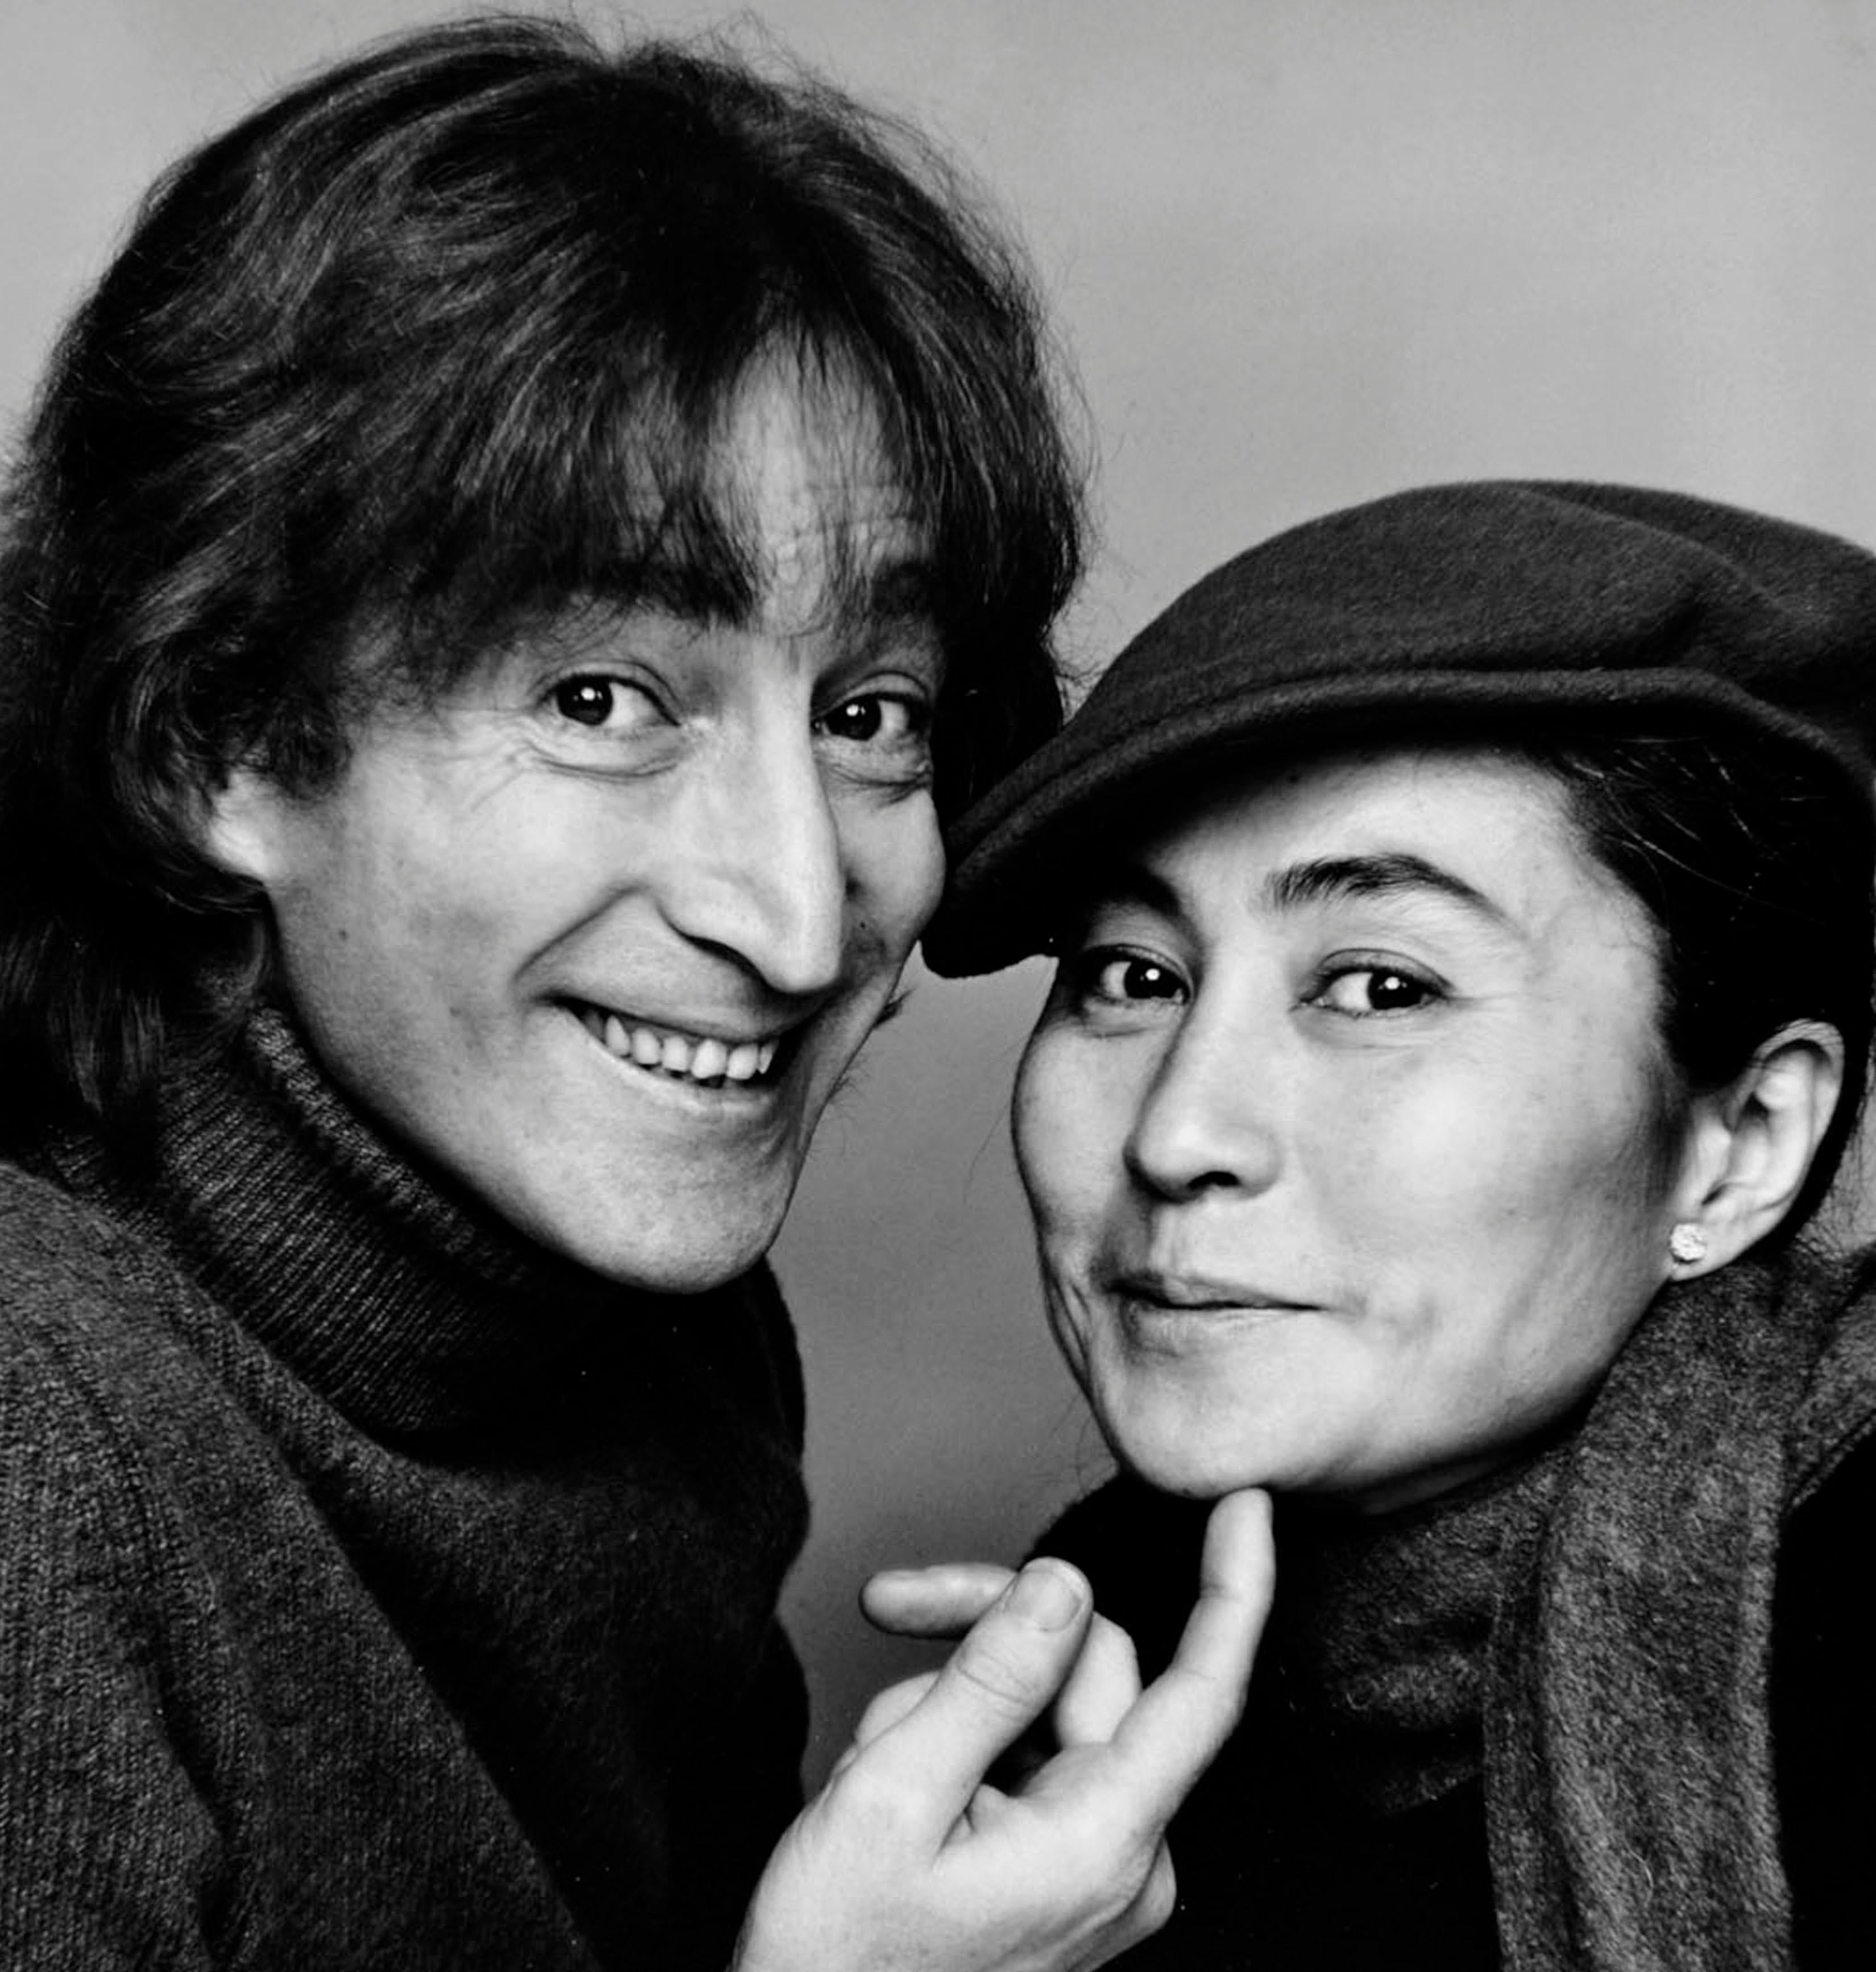 John Lennon et Yoko Ono photographiés le 2 novembre, signés - Photograph de Jack Mitchell